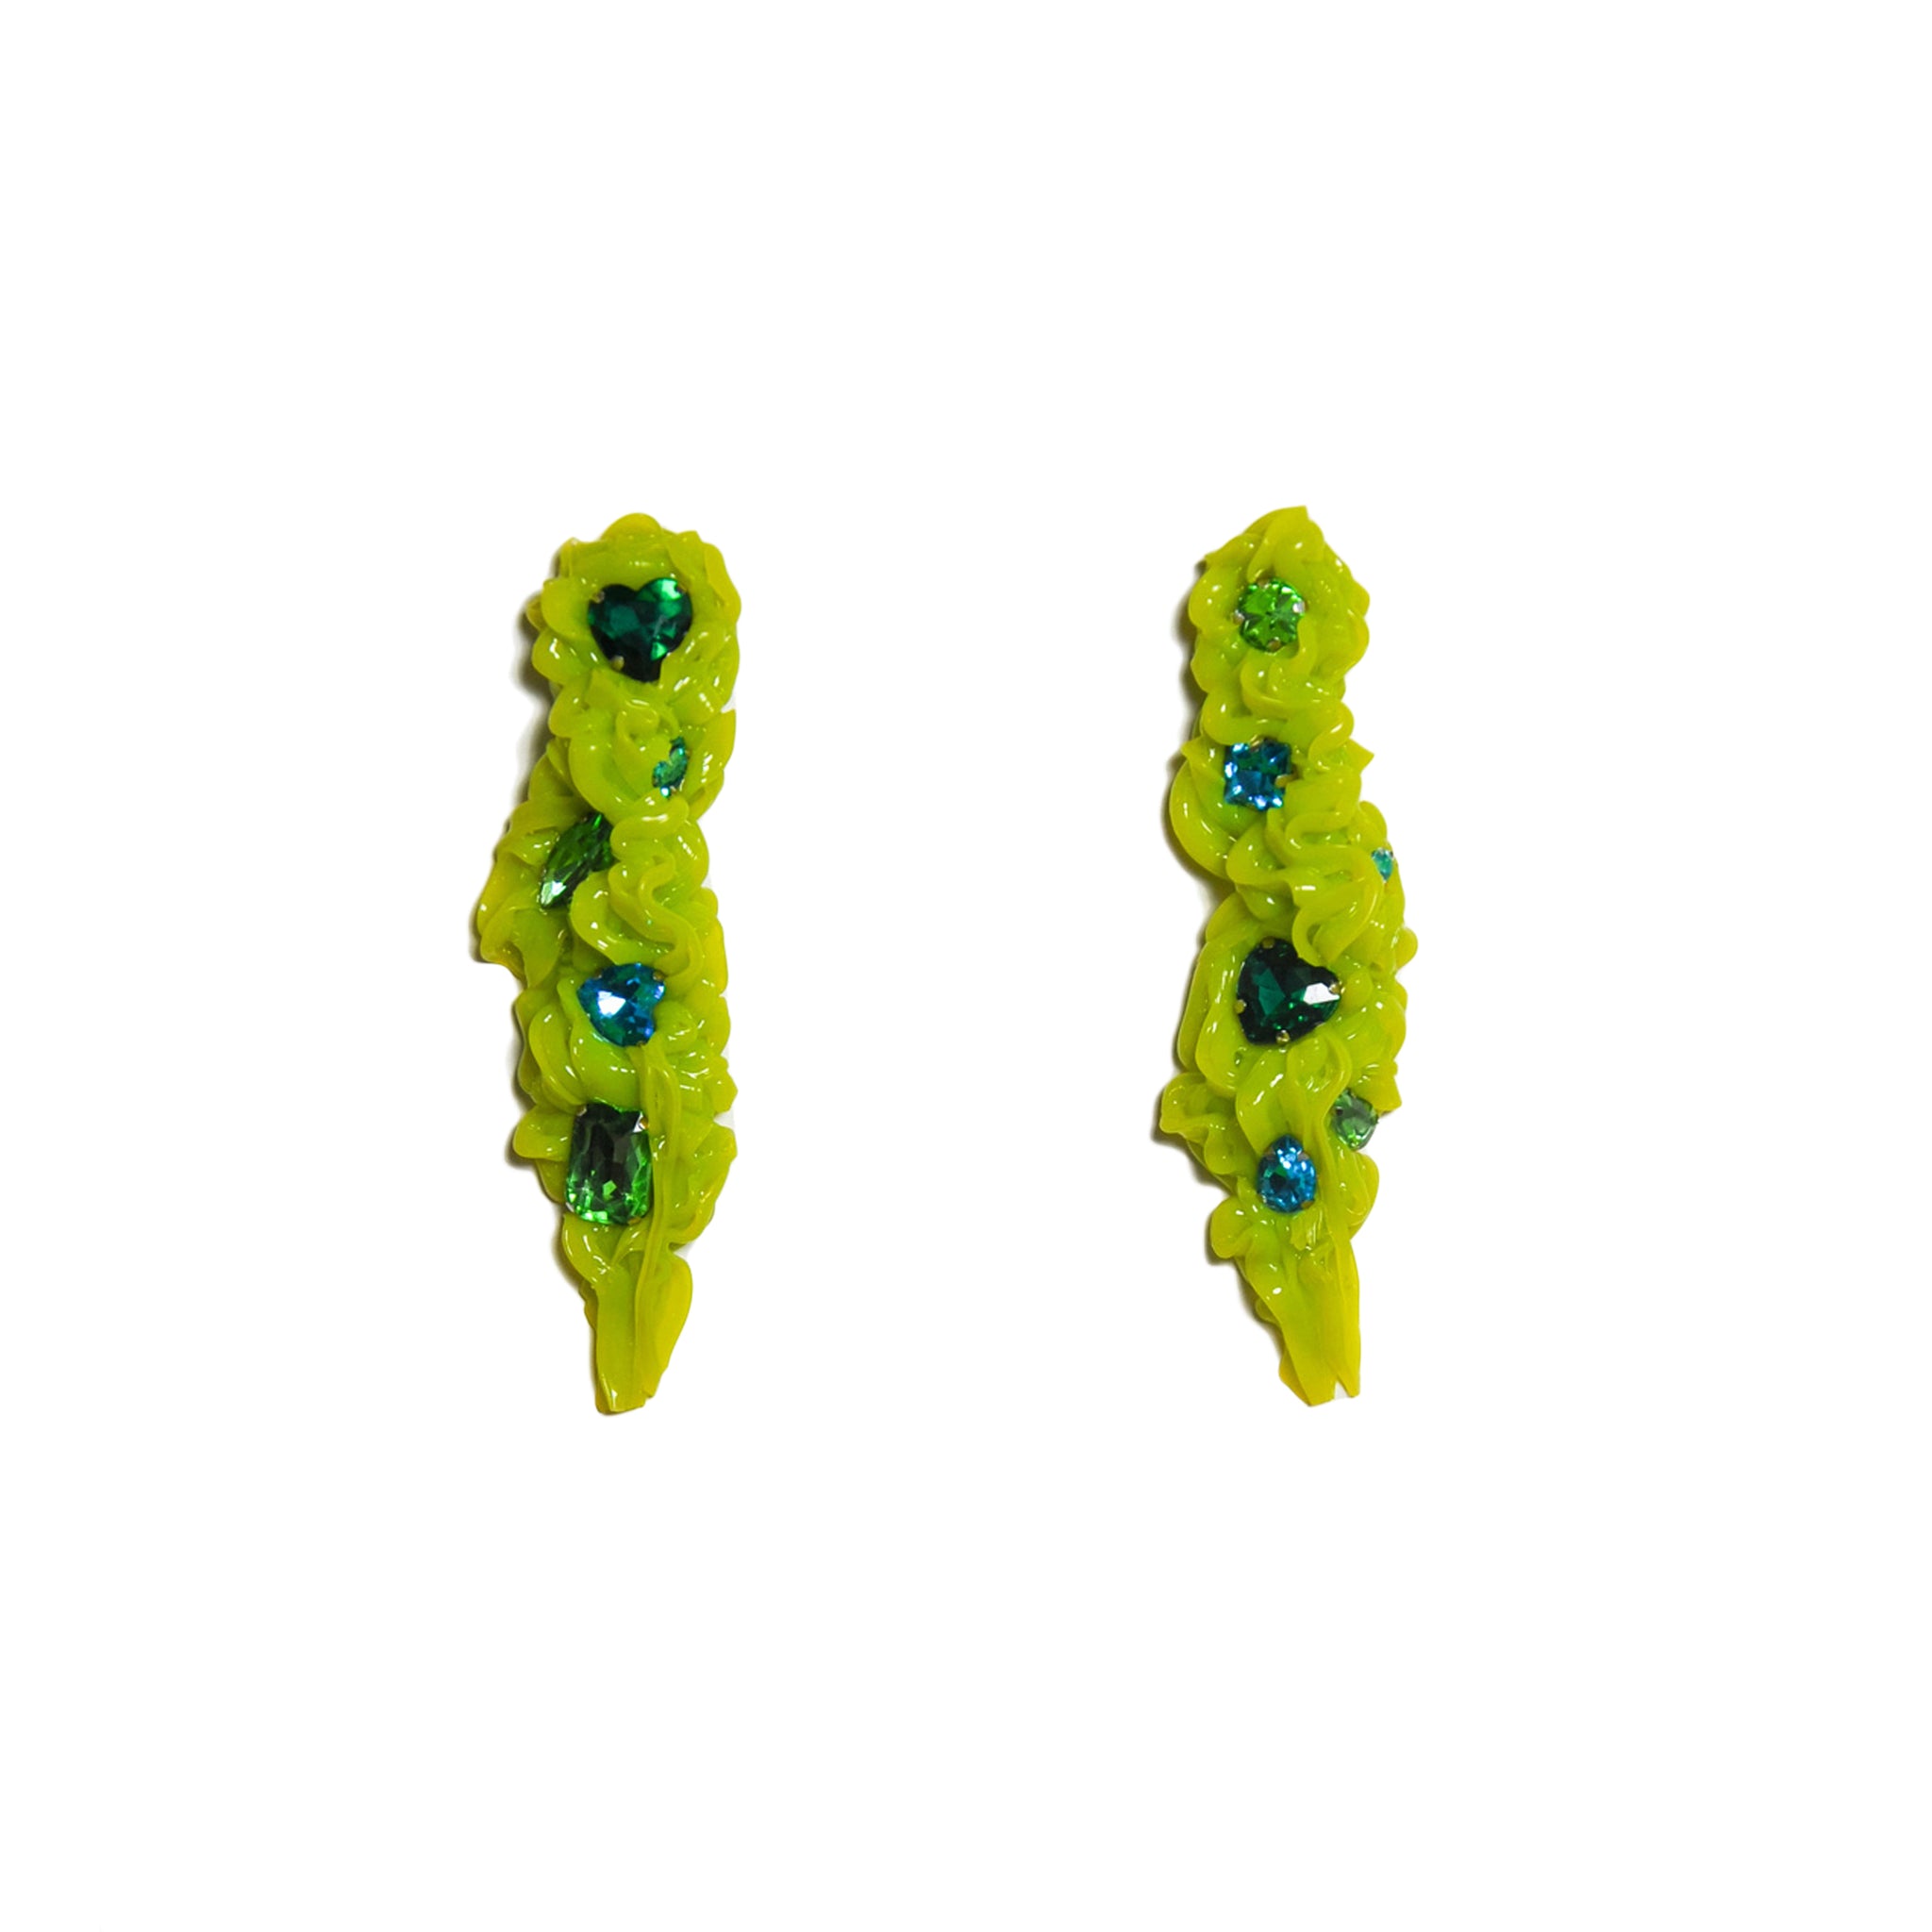 Green Whipped Jewel Earrings